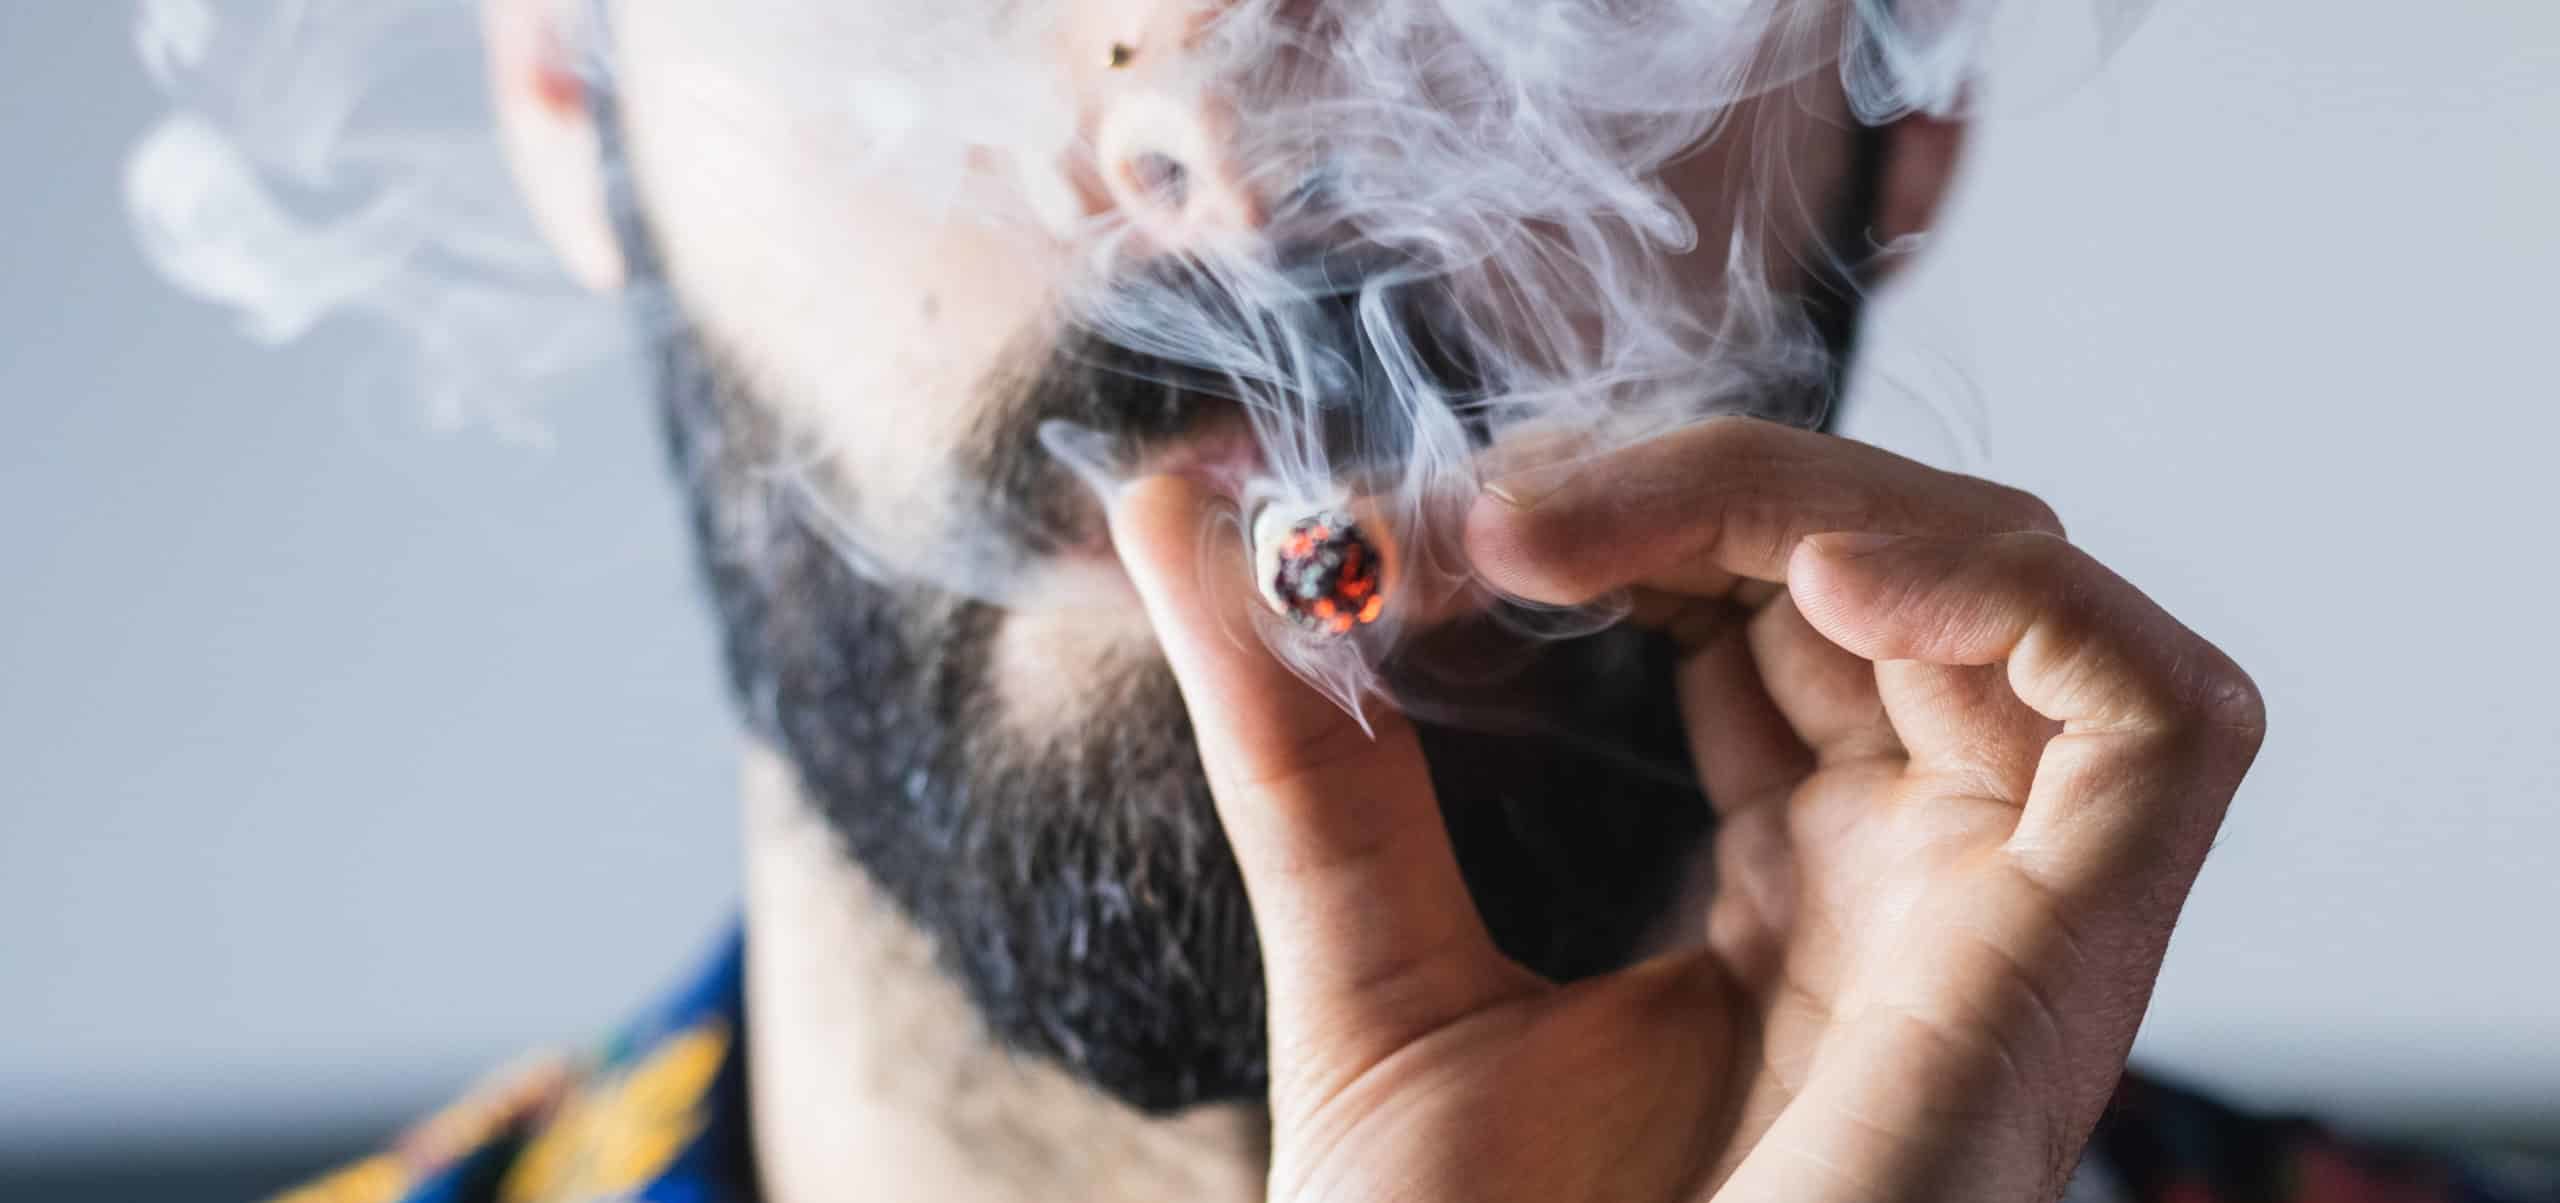 Close up of man with beard and mustache smoking marijuana joint